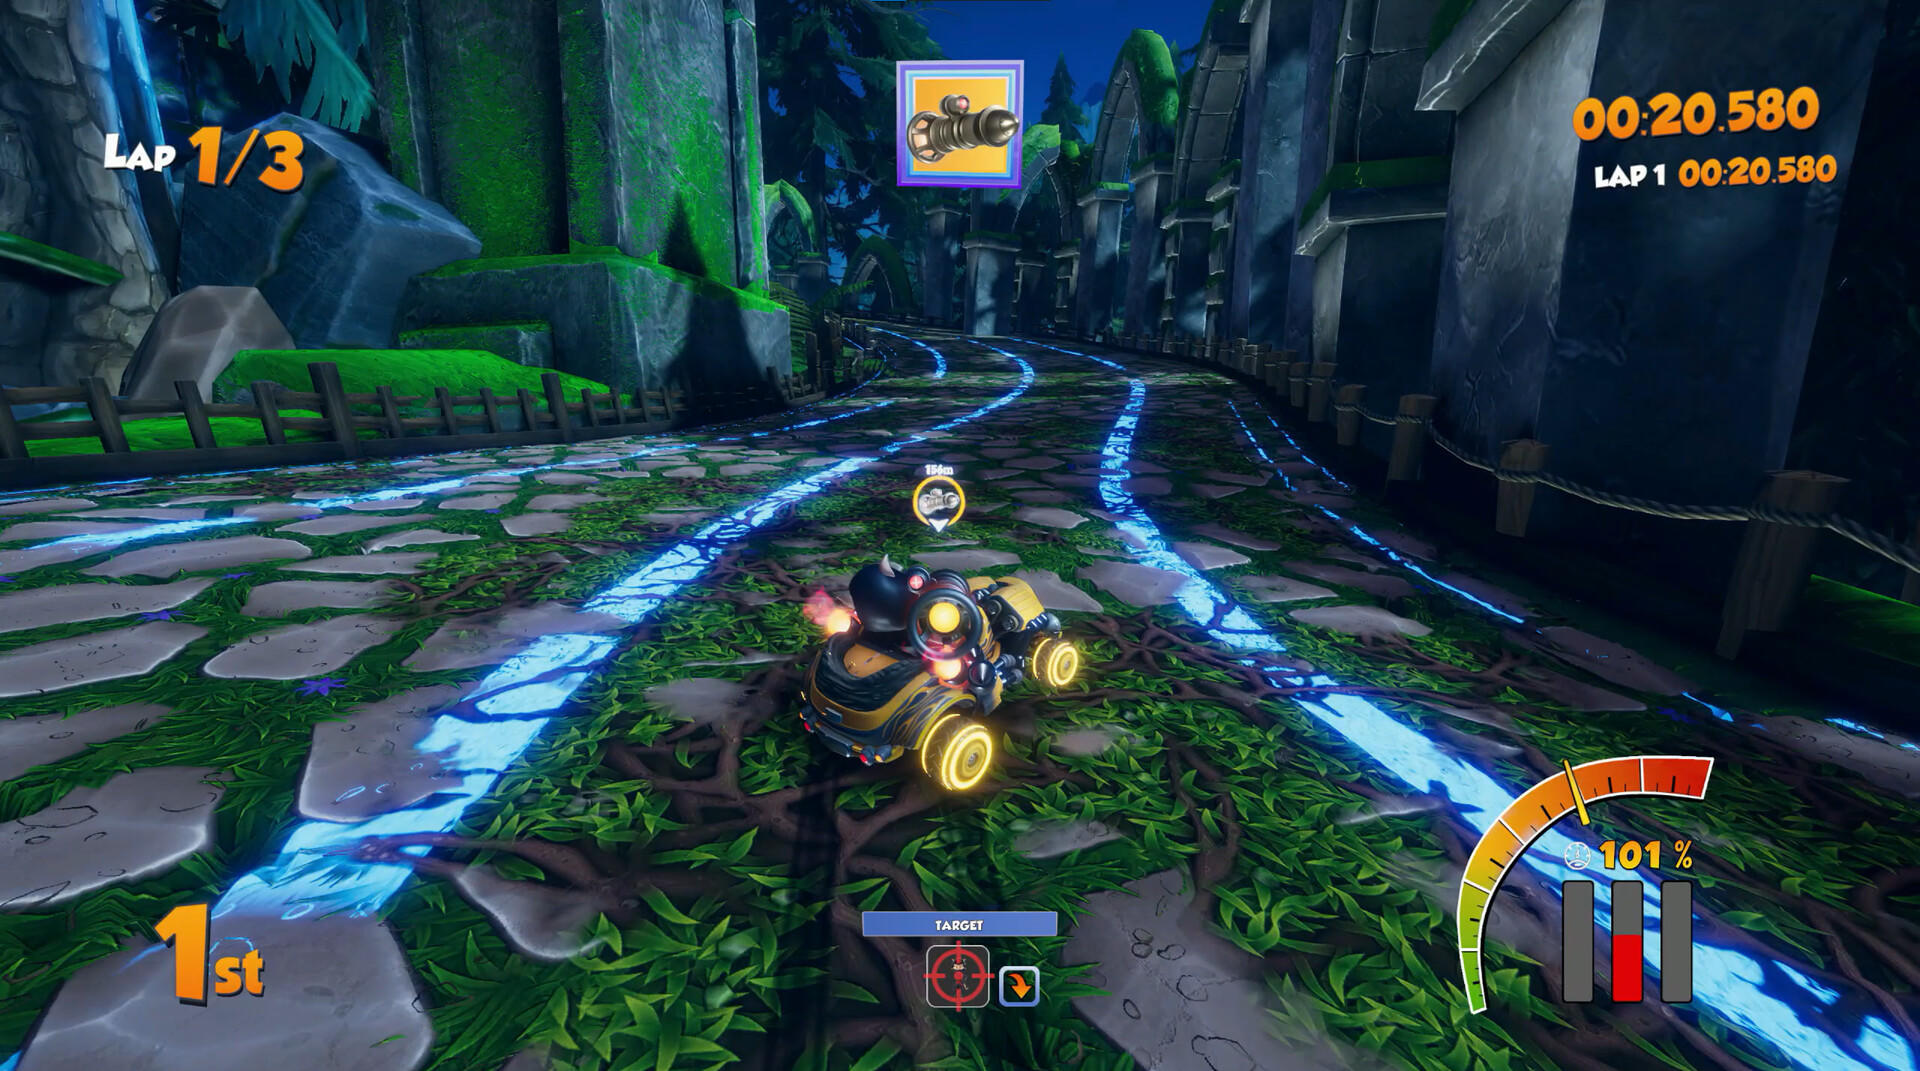 Crash Team Racing Nitro-Fueled 4 Player LOCAL Gameplay (PS4) 